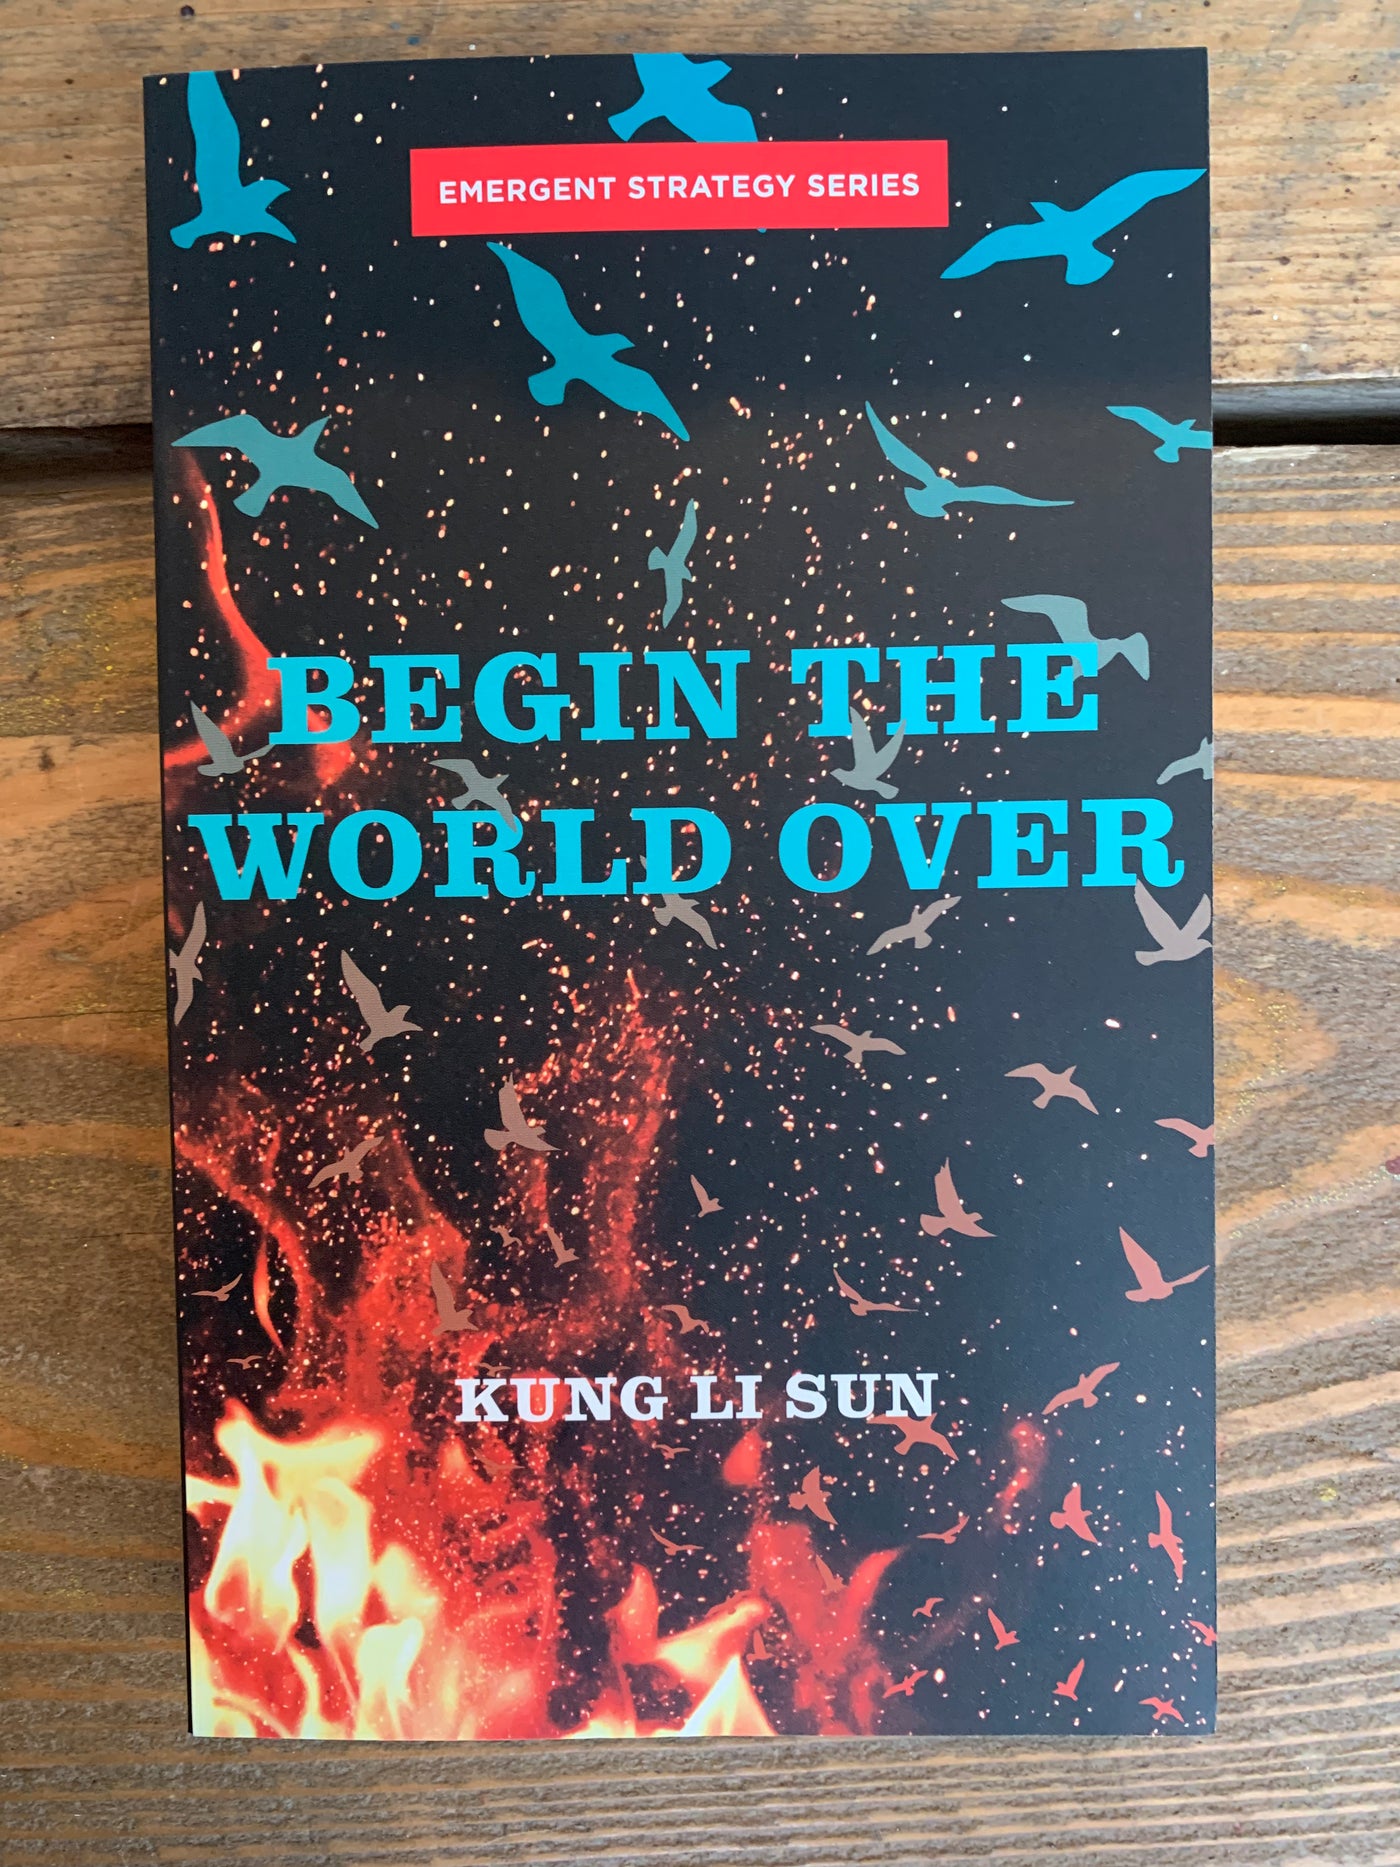 Begin the World Over